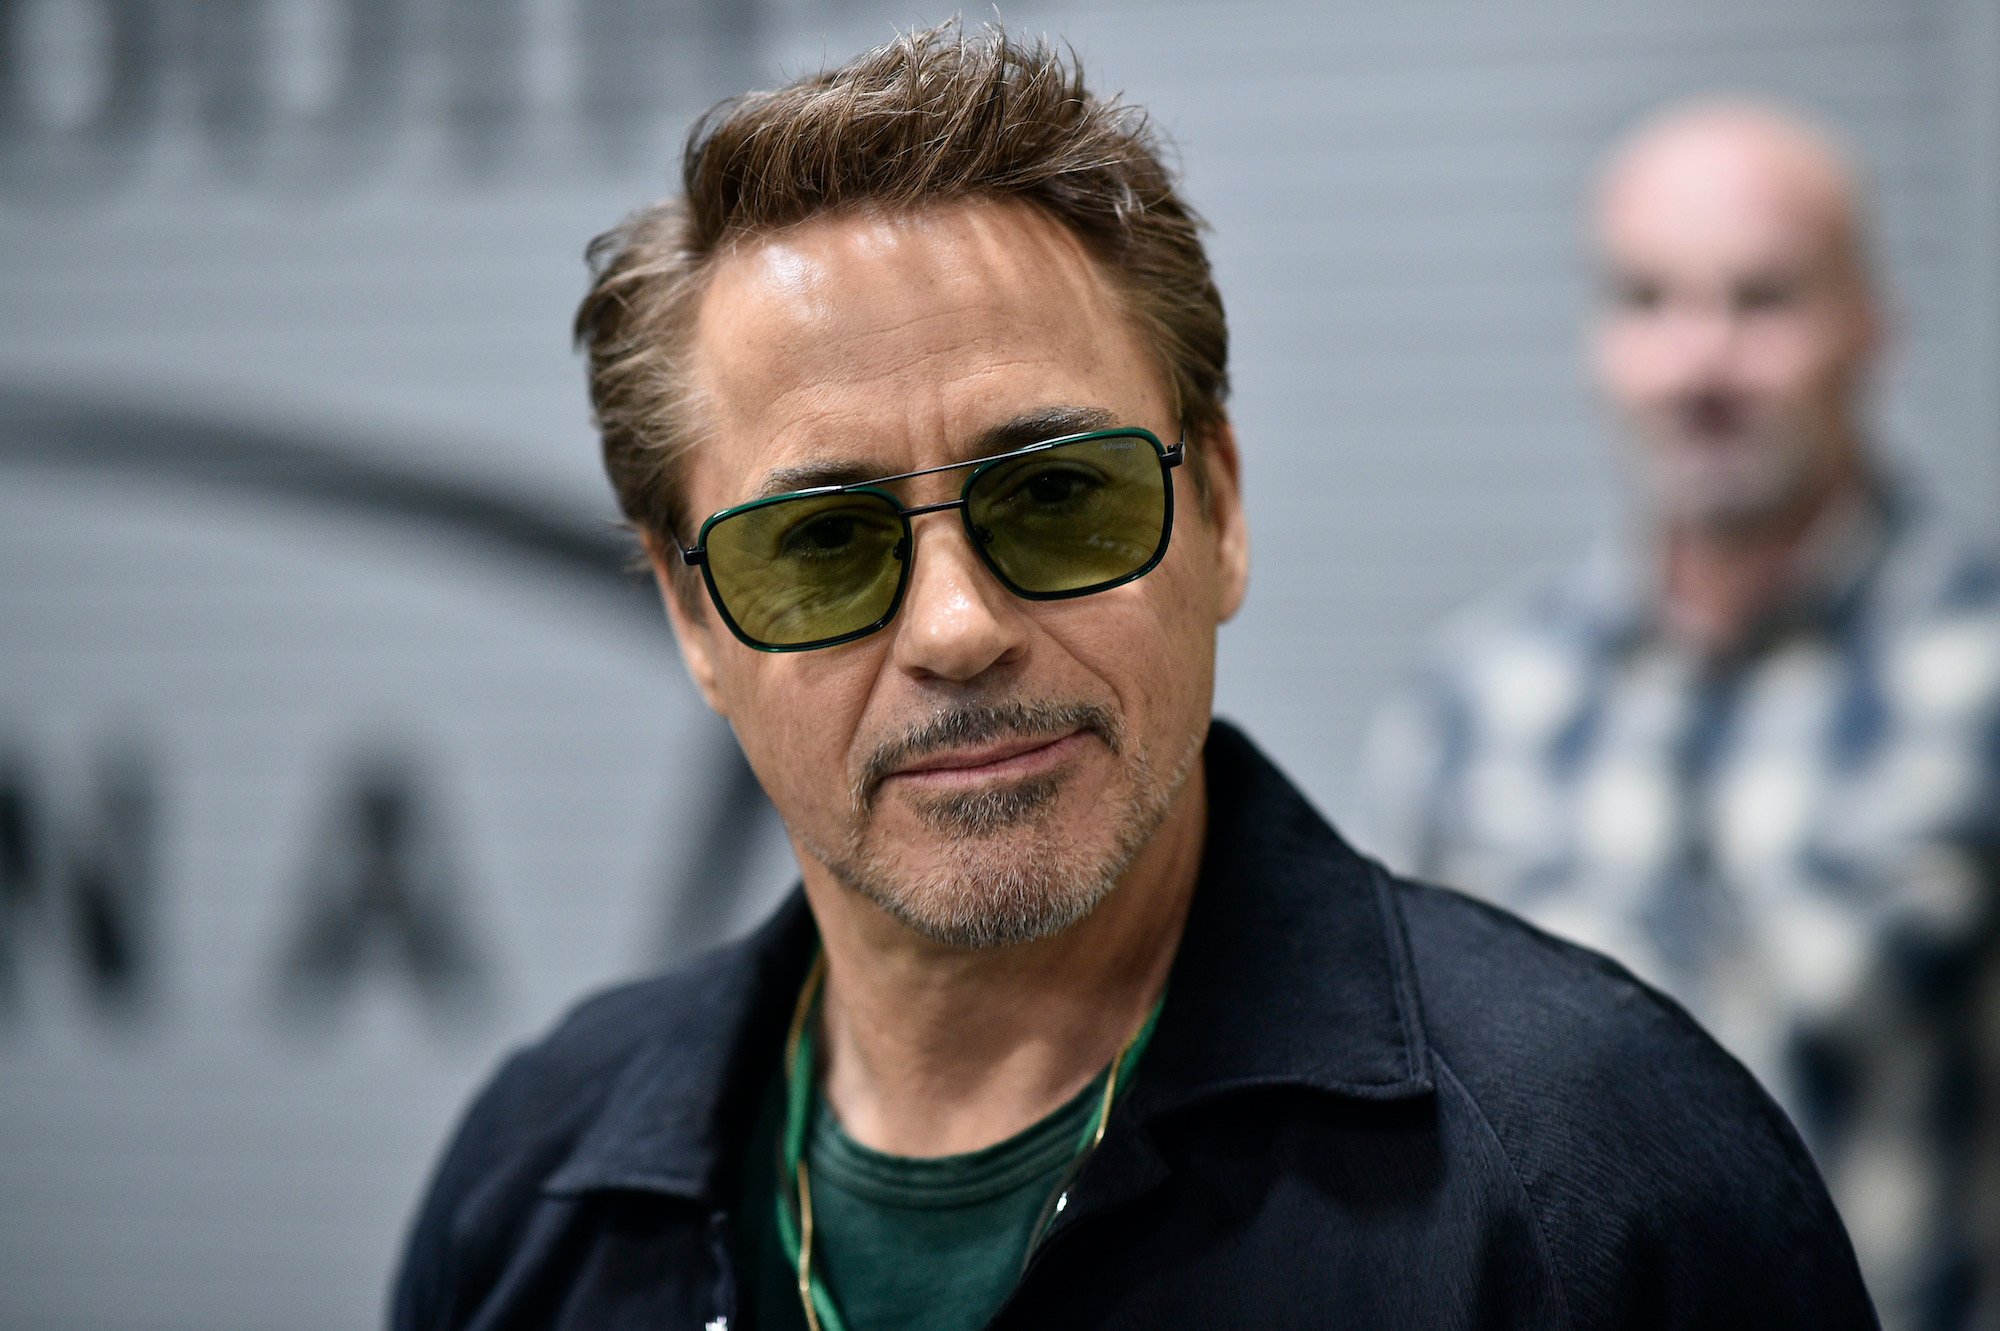 How Tall Is Iron Man Actor Robert Downey Jr.